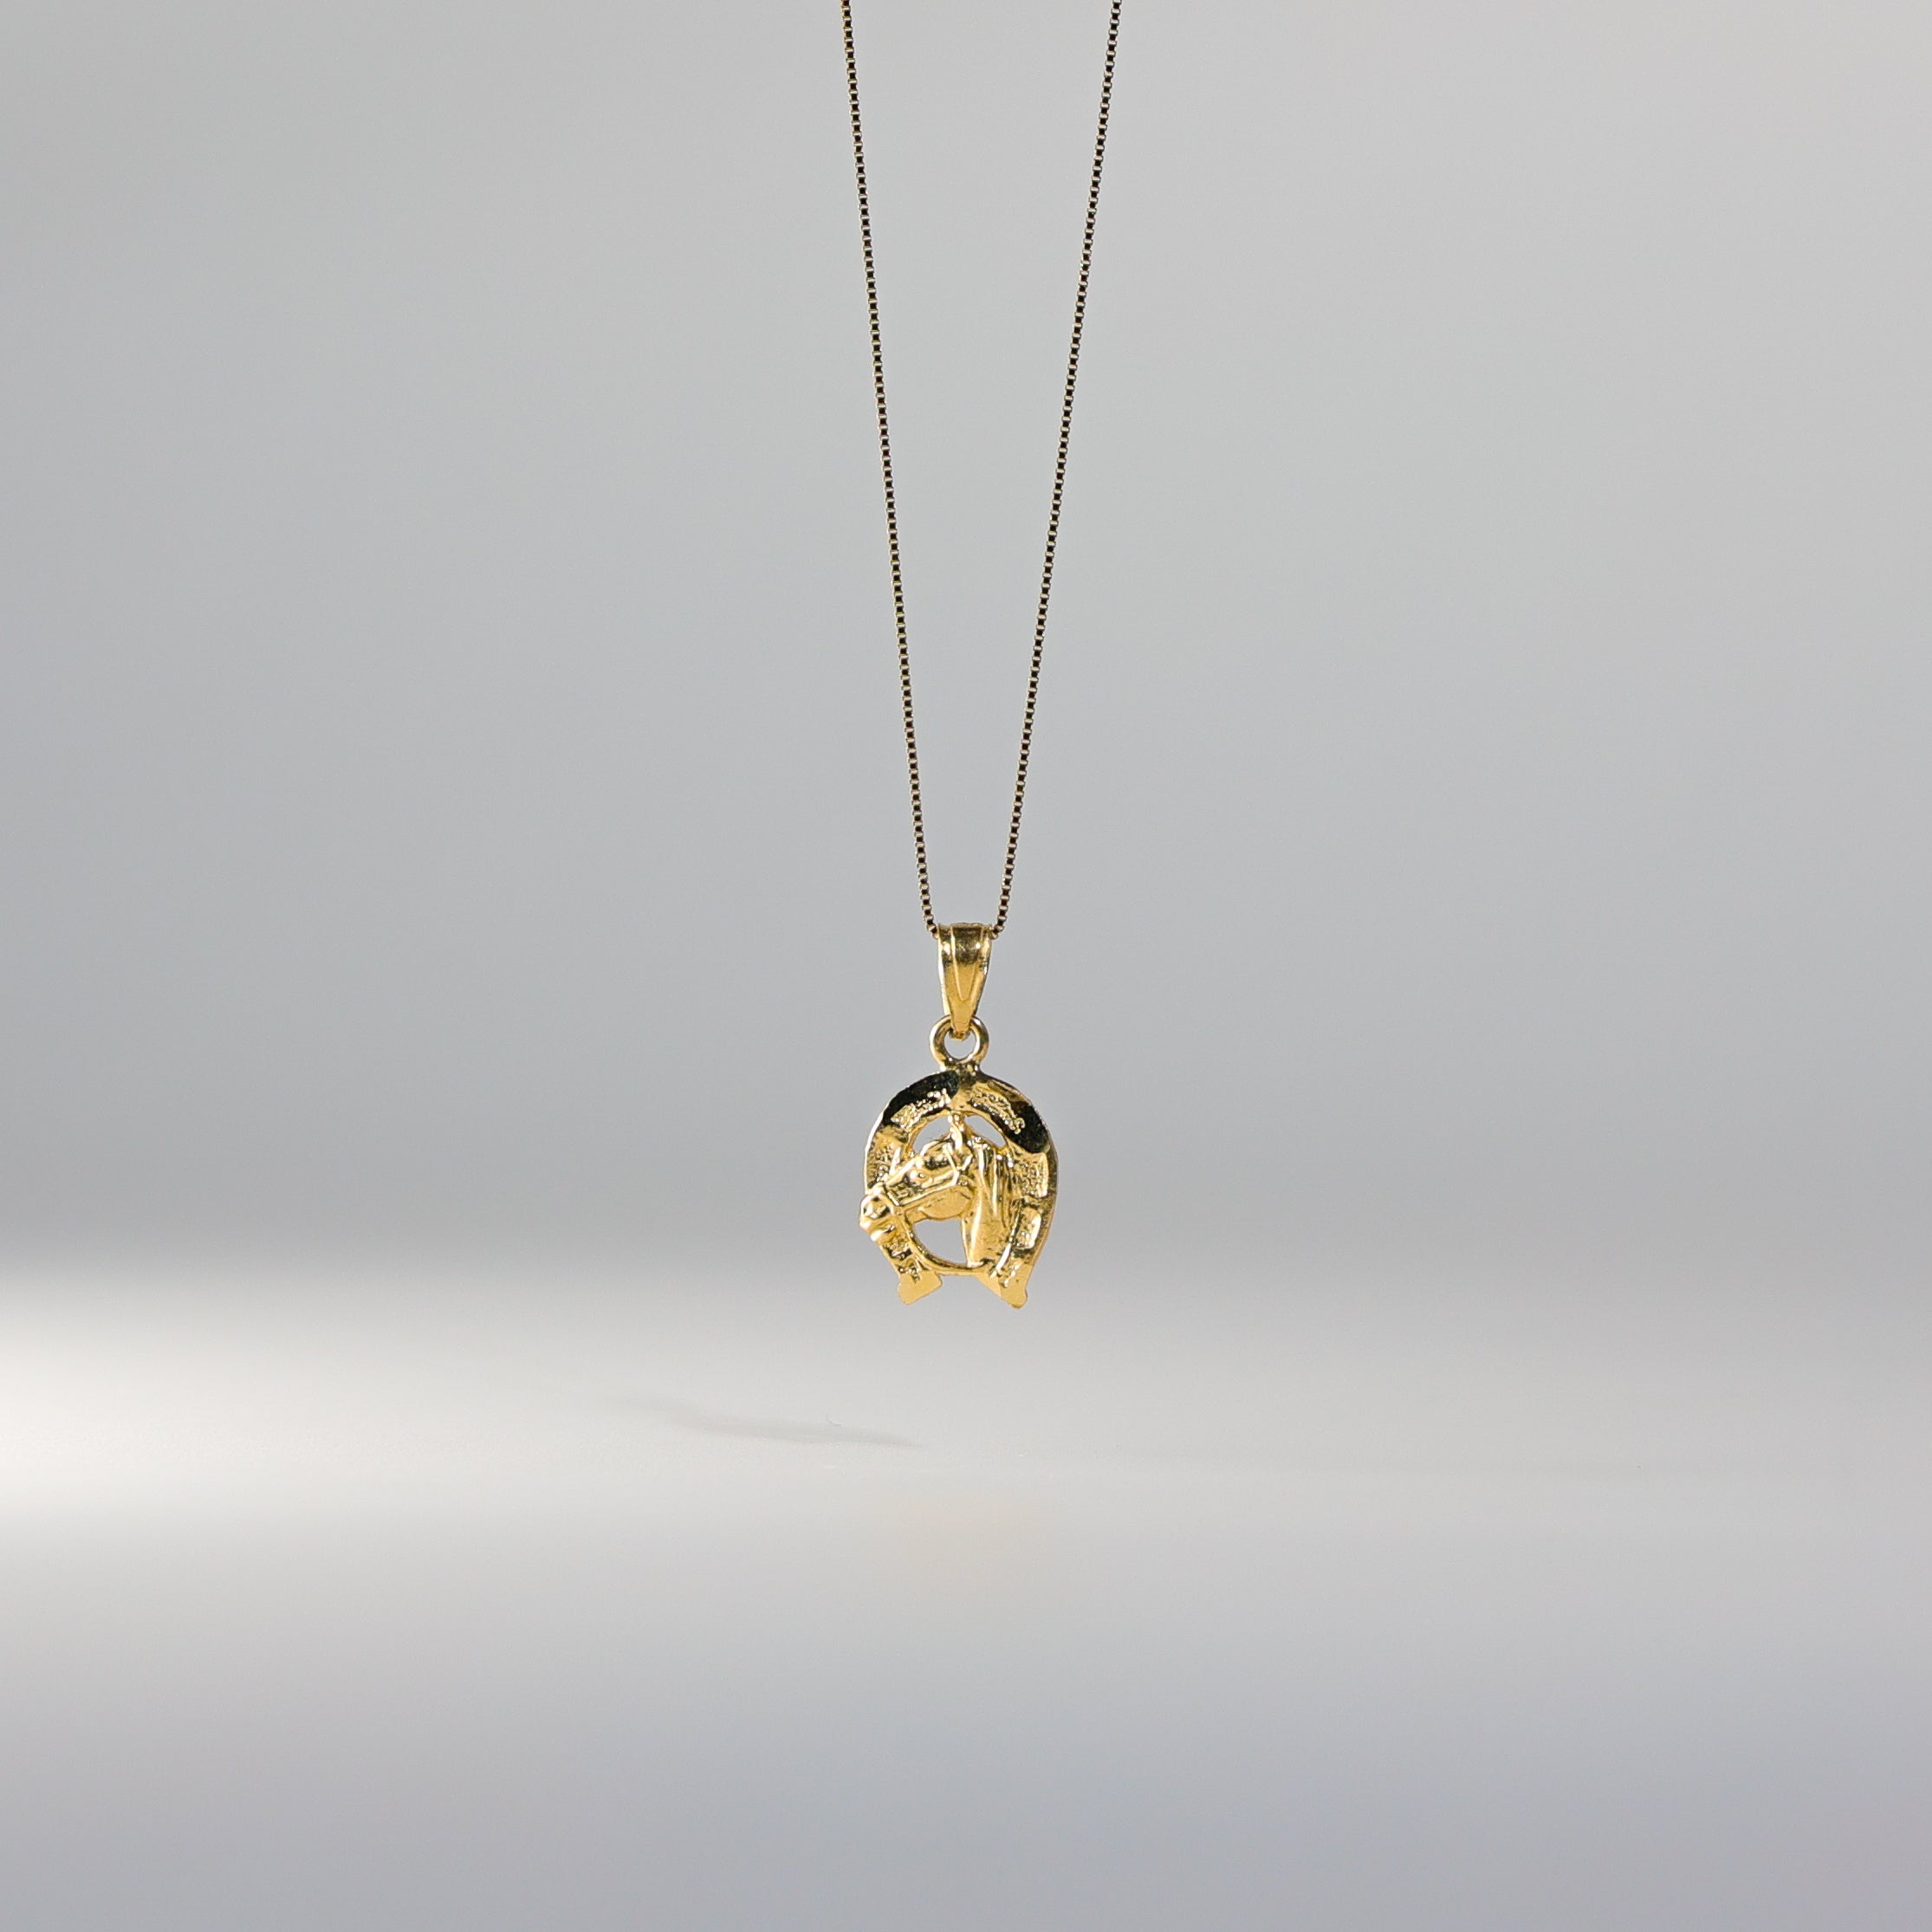 Gold Lucky Horseshoe Pendant Model-1636 - Charlie & Co. Jewelry